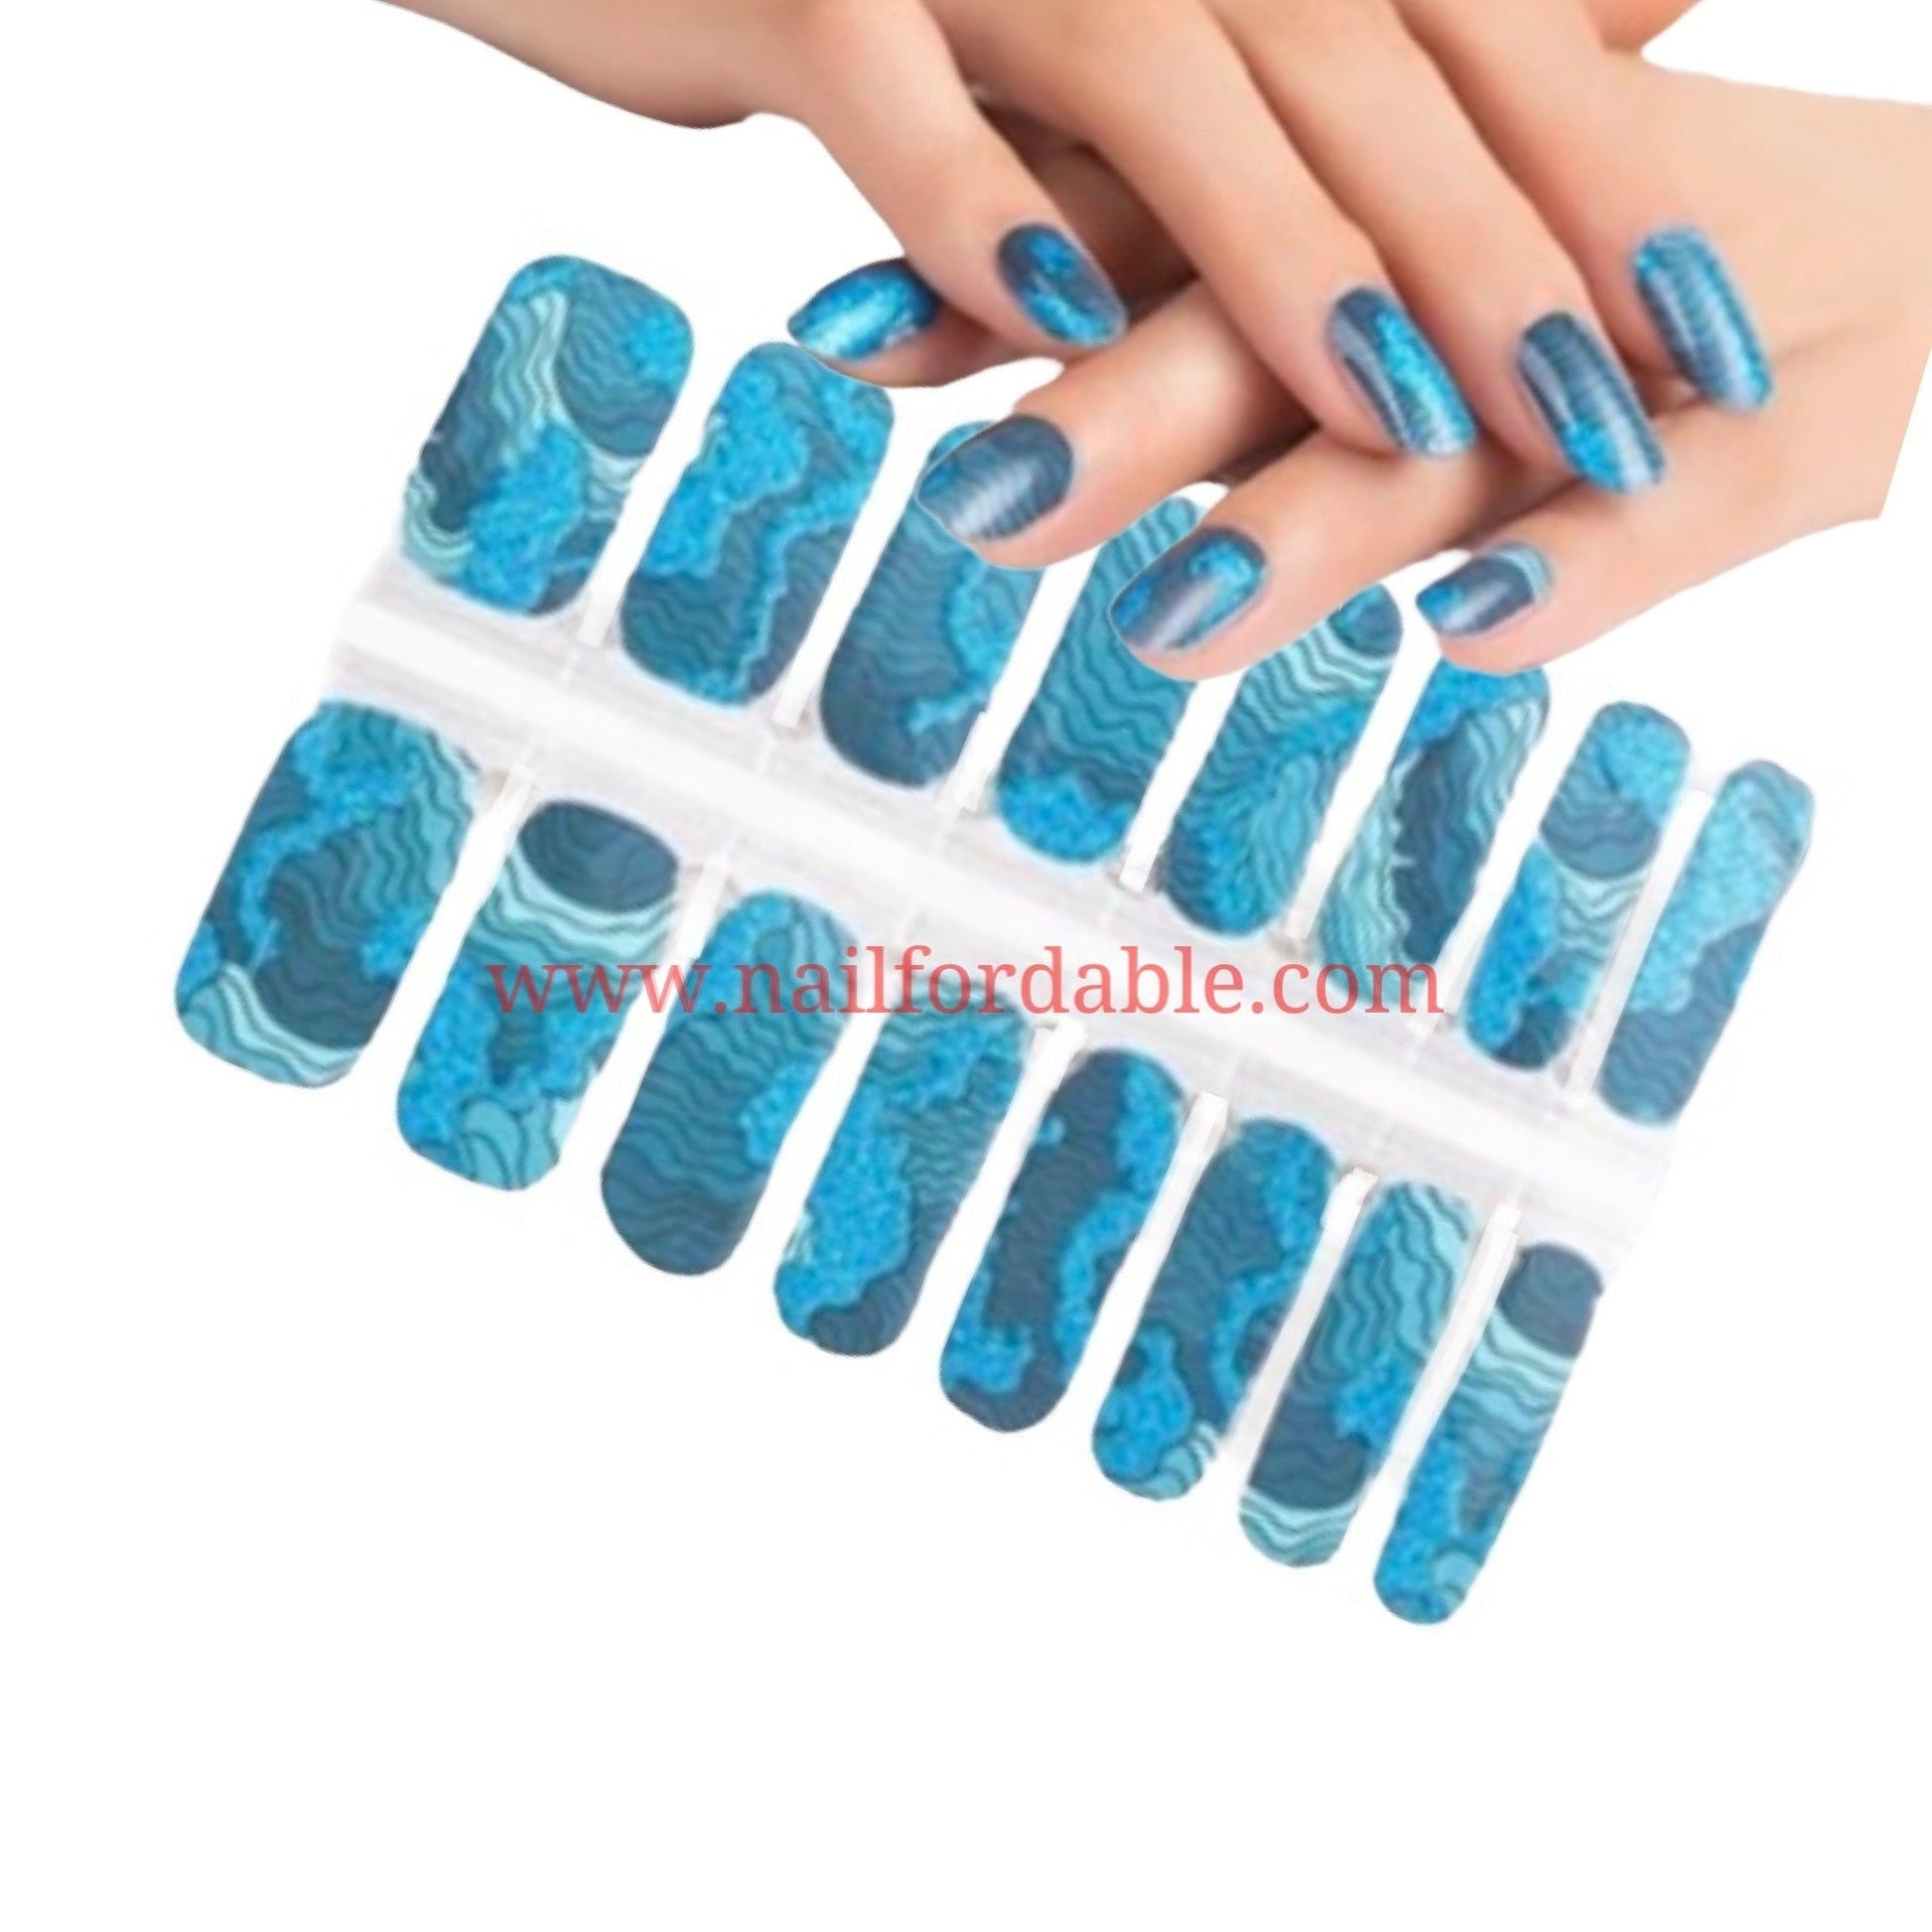 Coral reef Nail Wraps | Semi Cured Gel Wraps | Gel Nail Wraps |Nail Polish | Nail Stickers